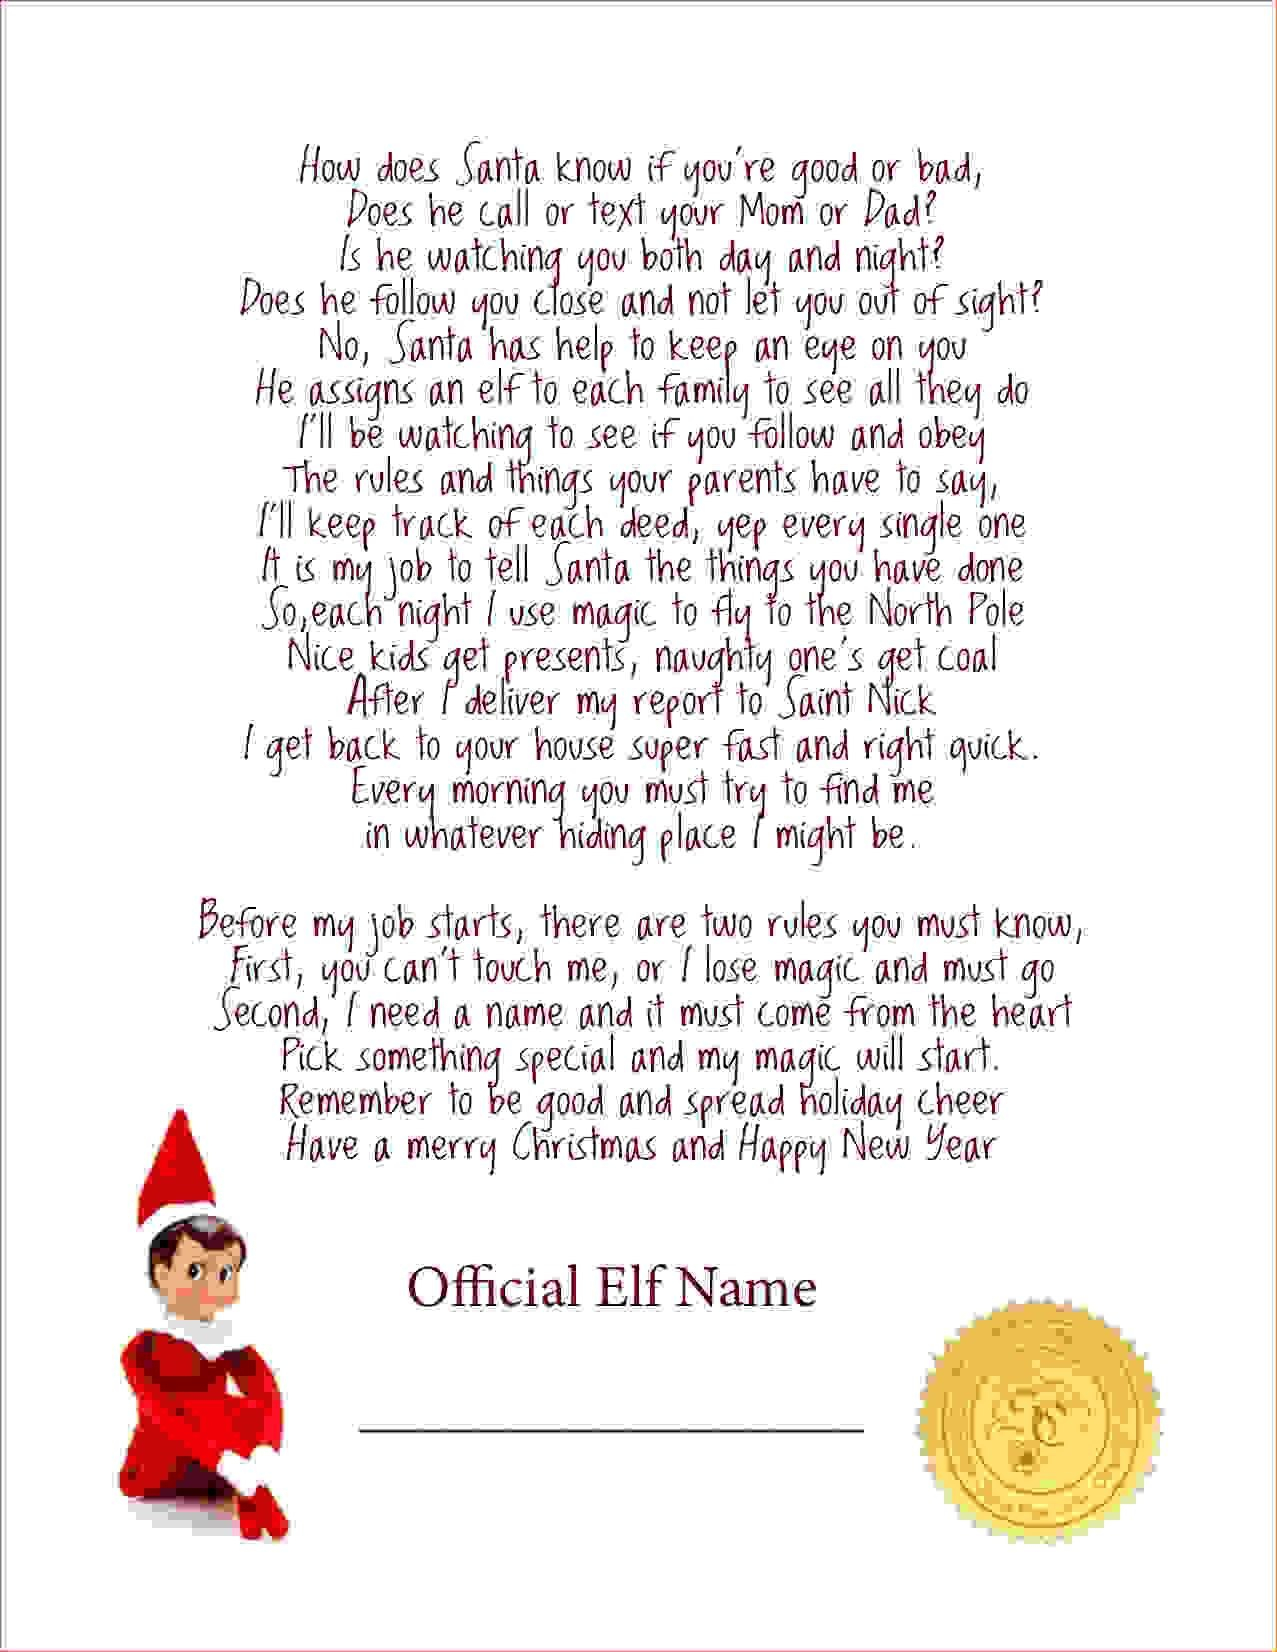 Goodbye Elf Shelf Letter  New Calendar Template Site  Elf On The in Goodbye Letter From Elf On The Shelf Template